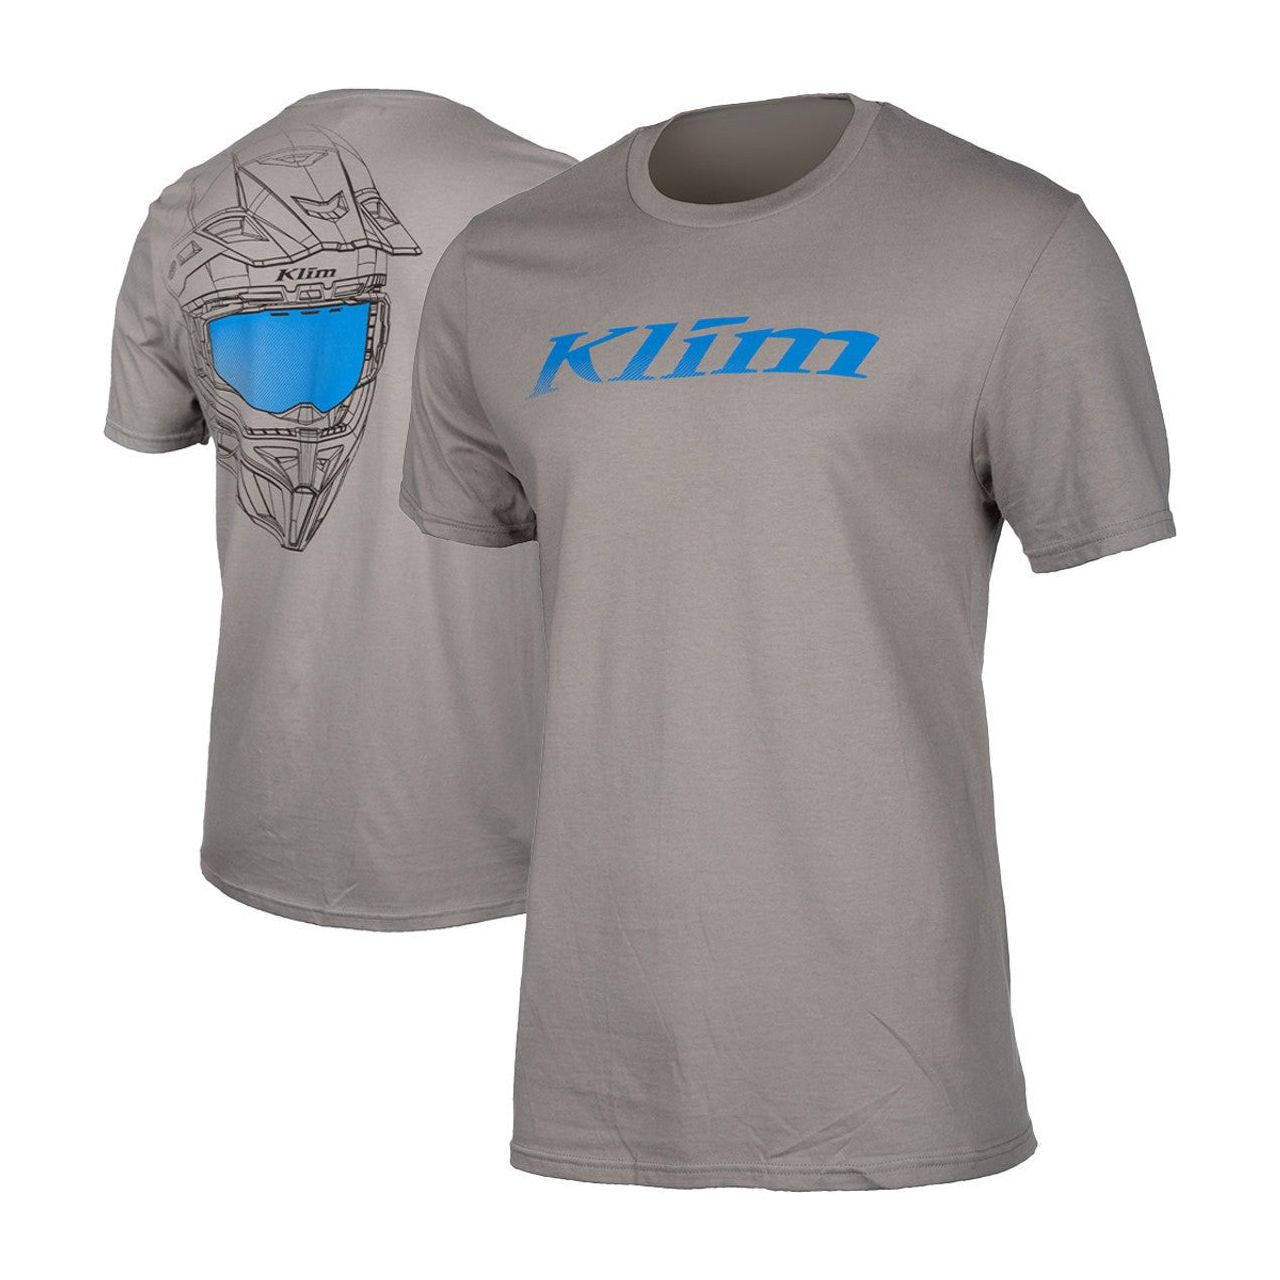 Klim t-shirt "Draft" - EdTools